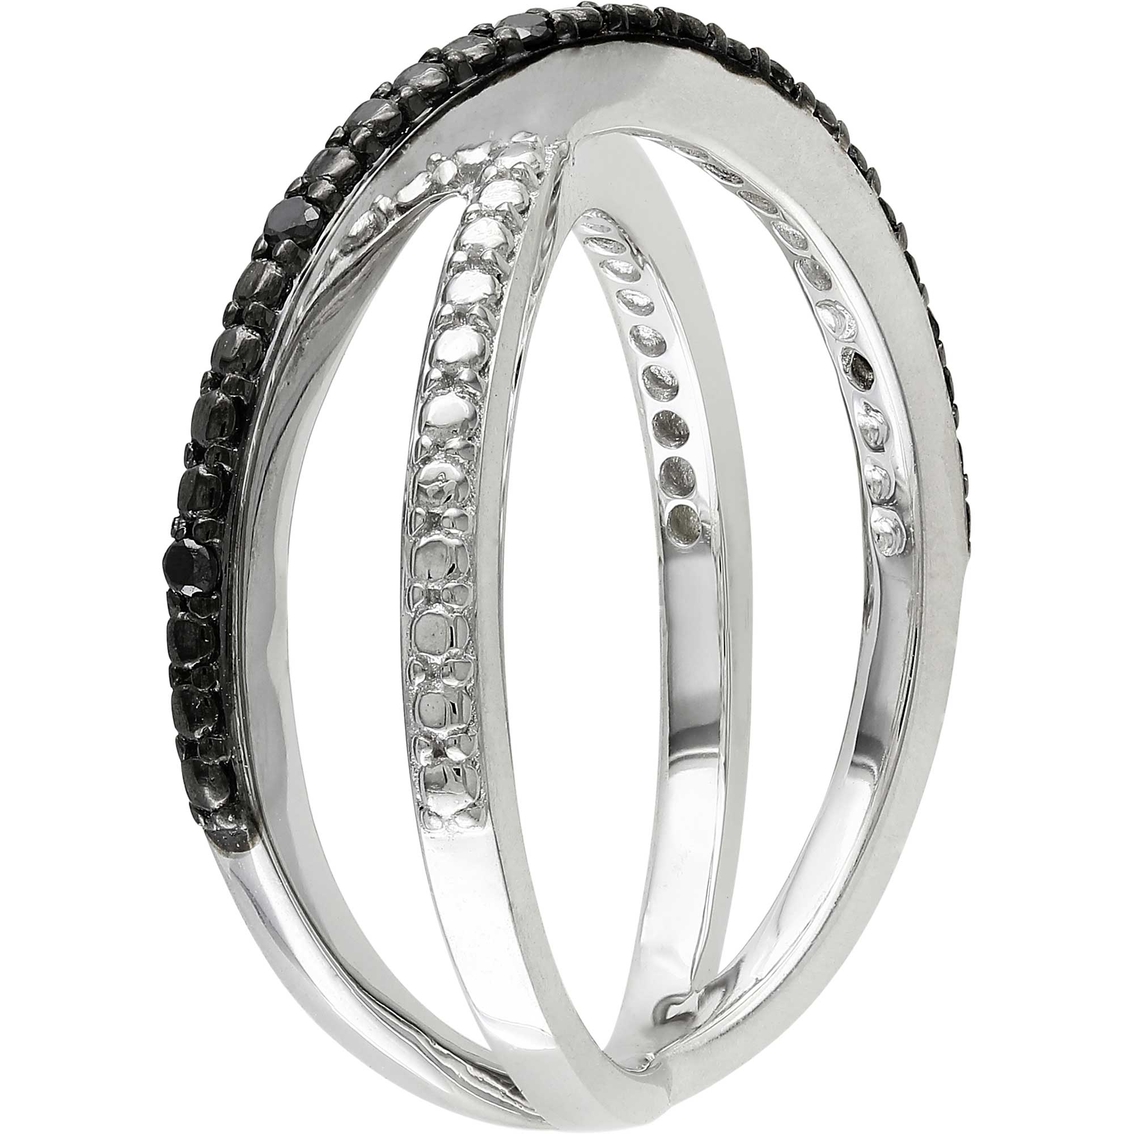 Sofia B. Black Rhodium Over Sterling Silver Black Diamond Accent Crisscross Ring - Image 2 of 4